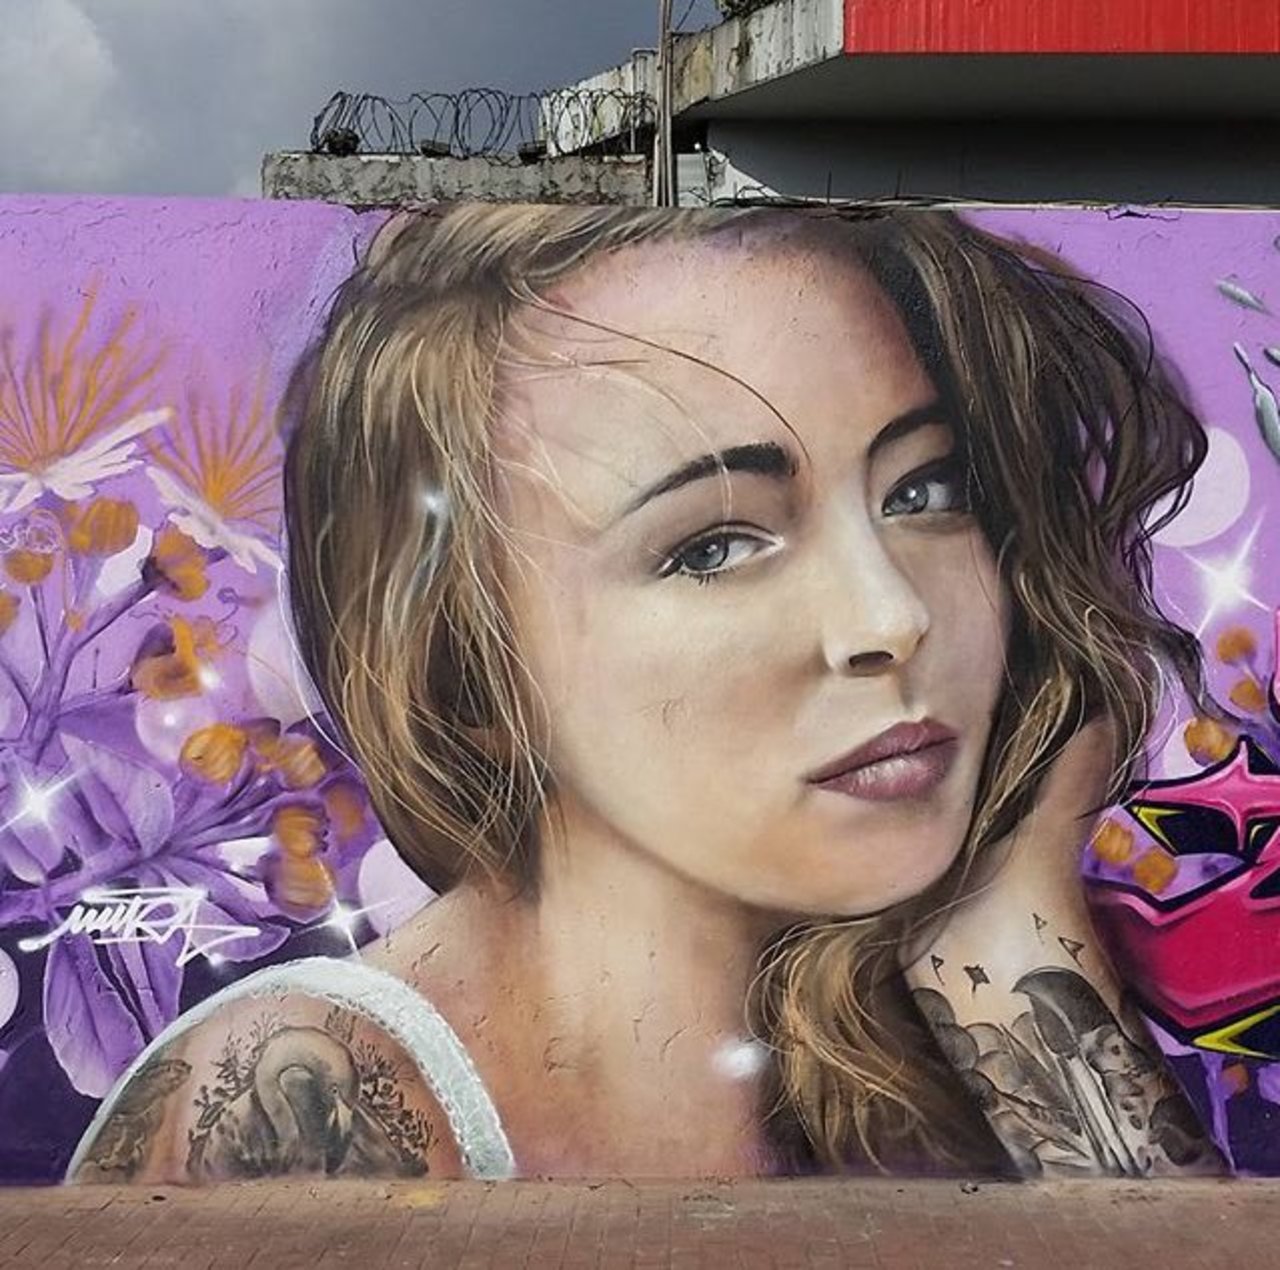 New Street Art by Mantarea 

#art #graffiti #mural #streetart https://t.co/U038PzVuGN